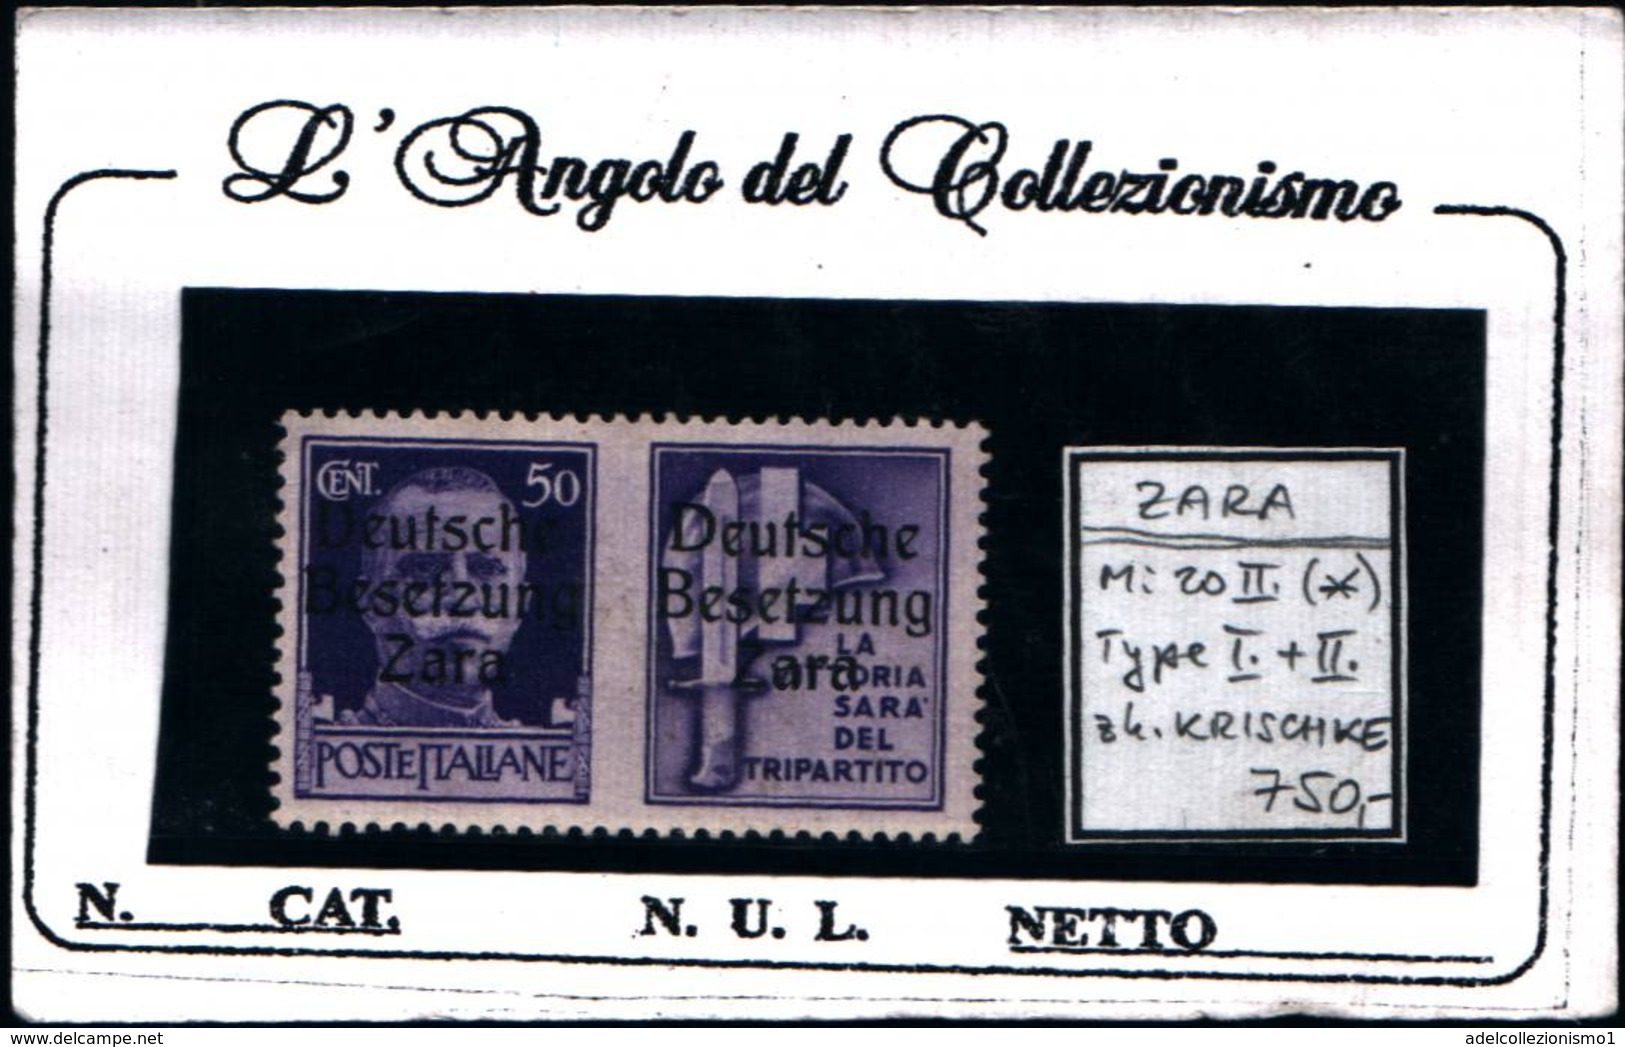 6941B) ITALIA- Zara, 50C. Serie Di Propaganda Sovrastampata - 9 Ottobre 1943-MI 20 II-TYPE I+ II -FIRMATO SENZA GOMMA - German Occ.: Zara